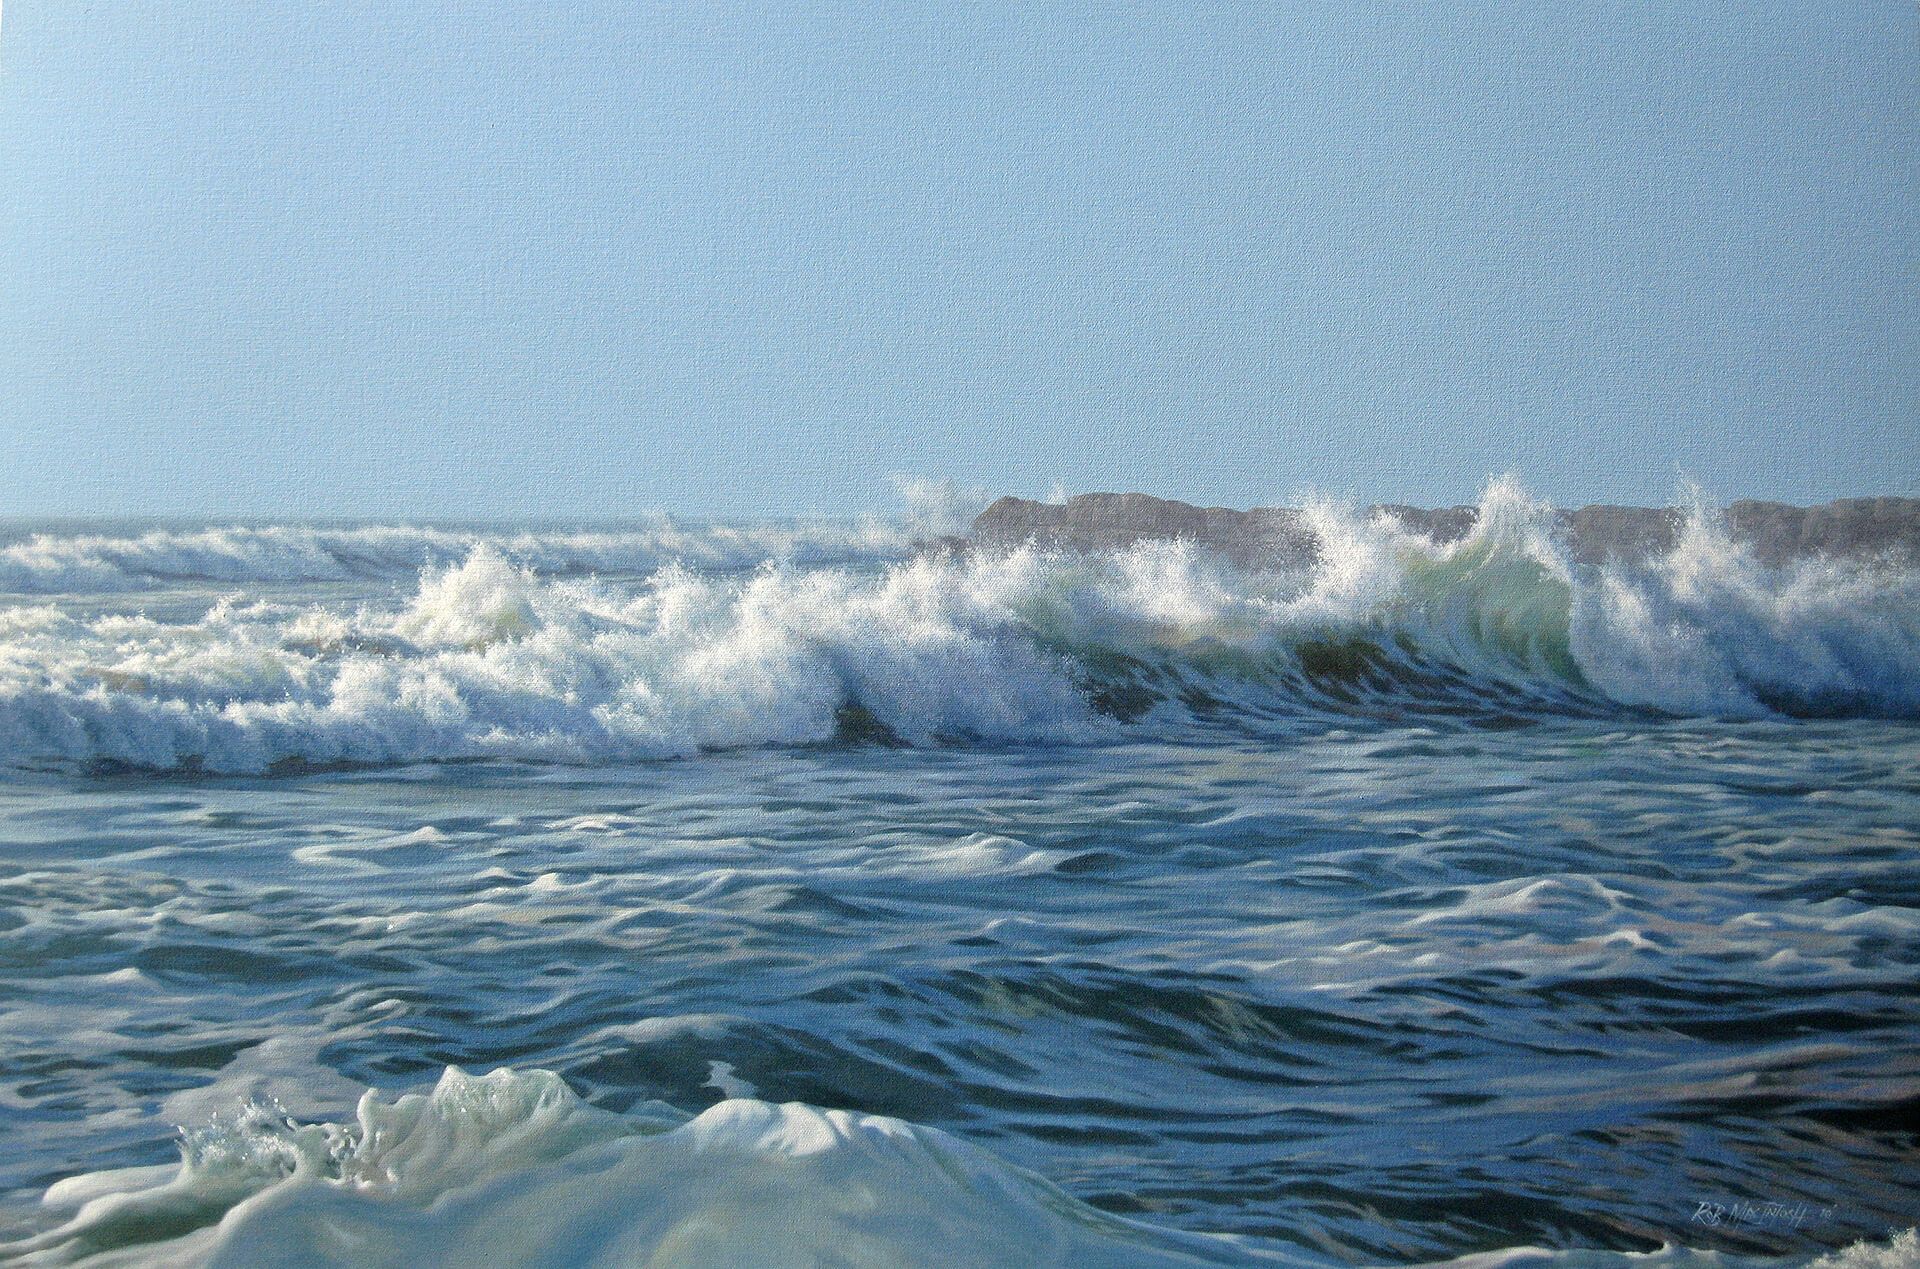 Photorealistic painting of waves crashing on the south coast